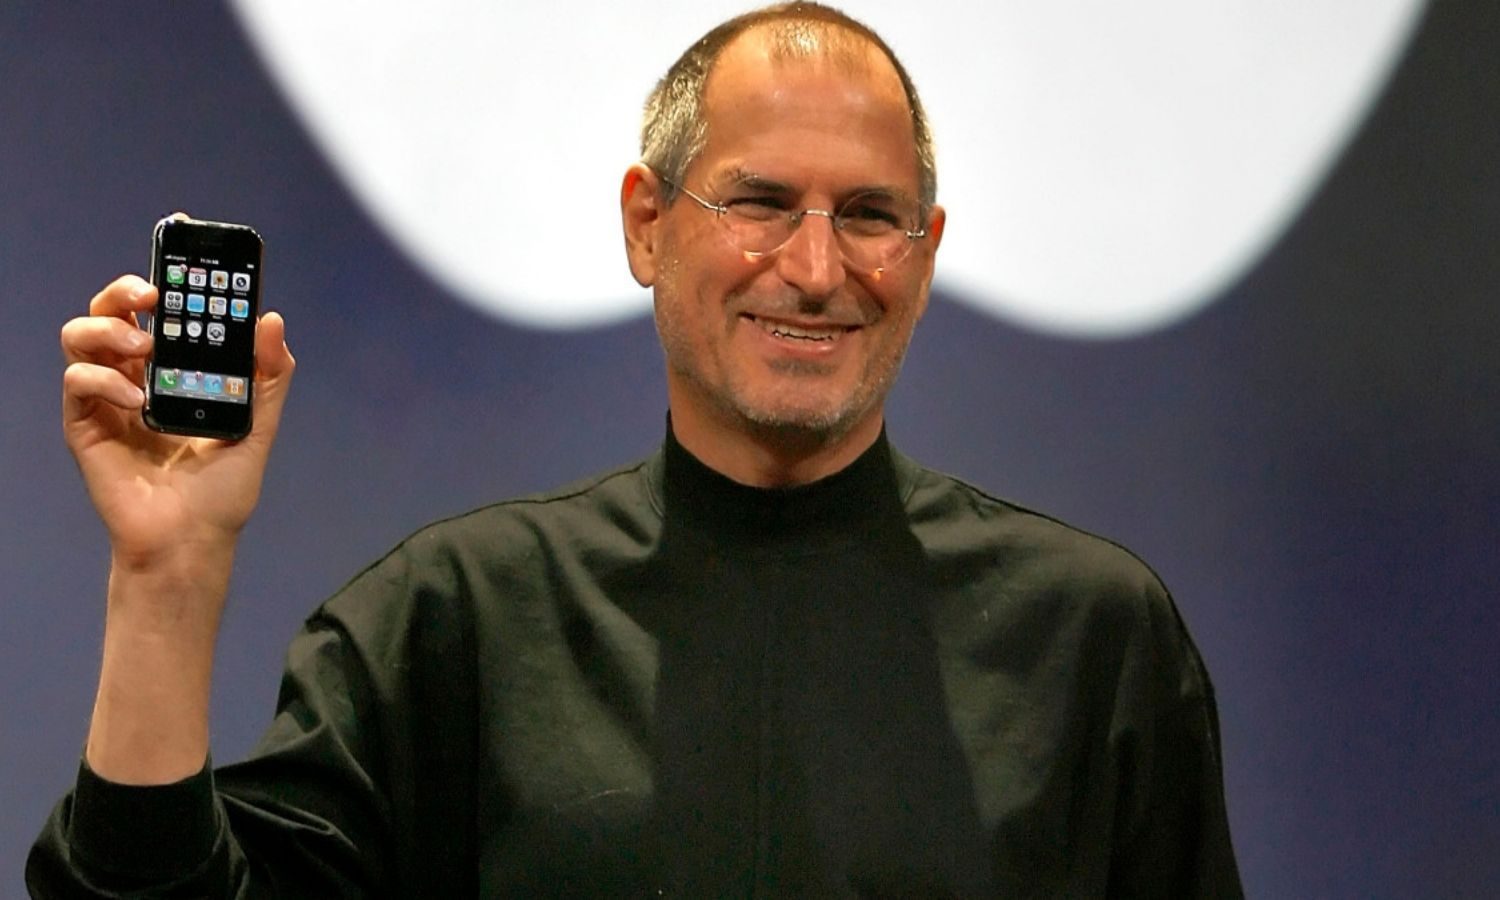 OTD in 2007: Steve Jobs announced Apple's very first smartphone